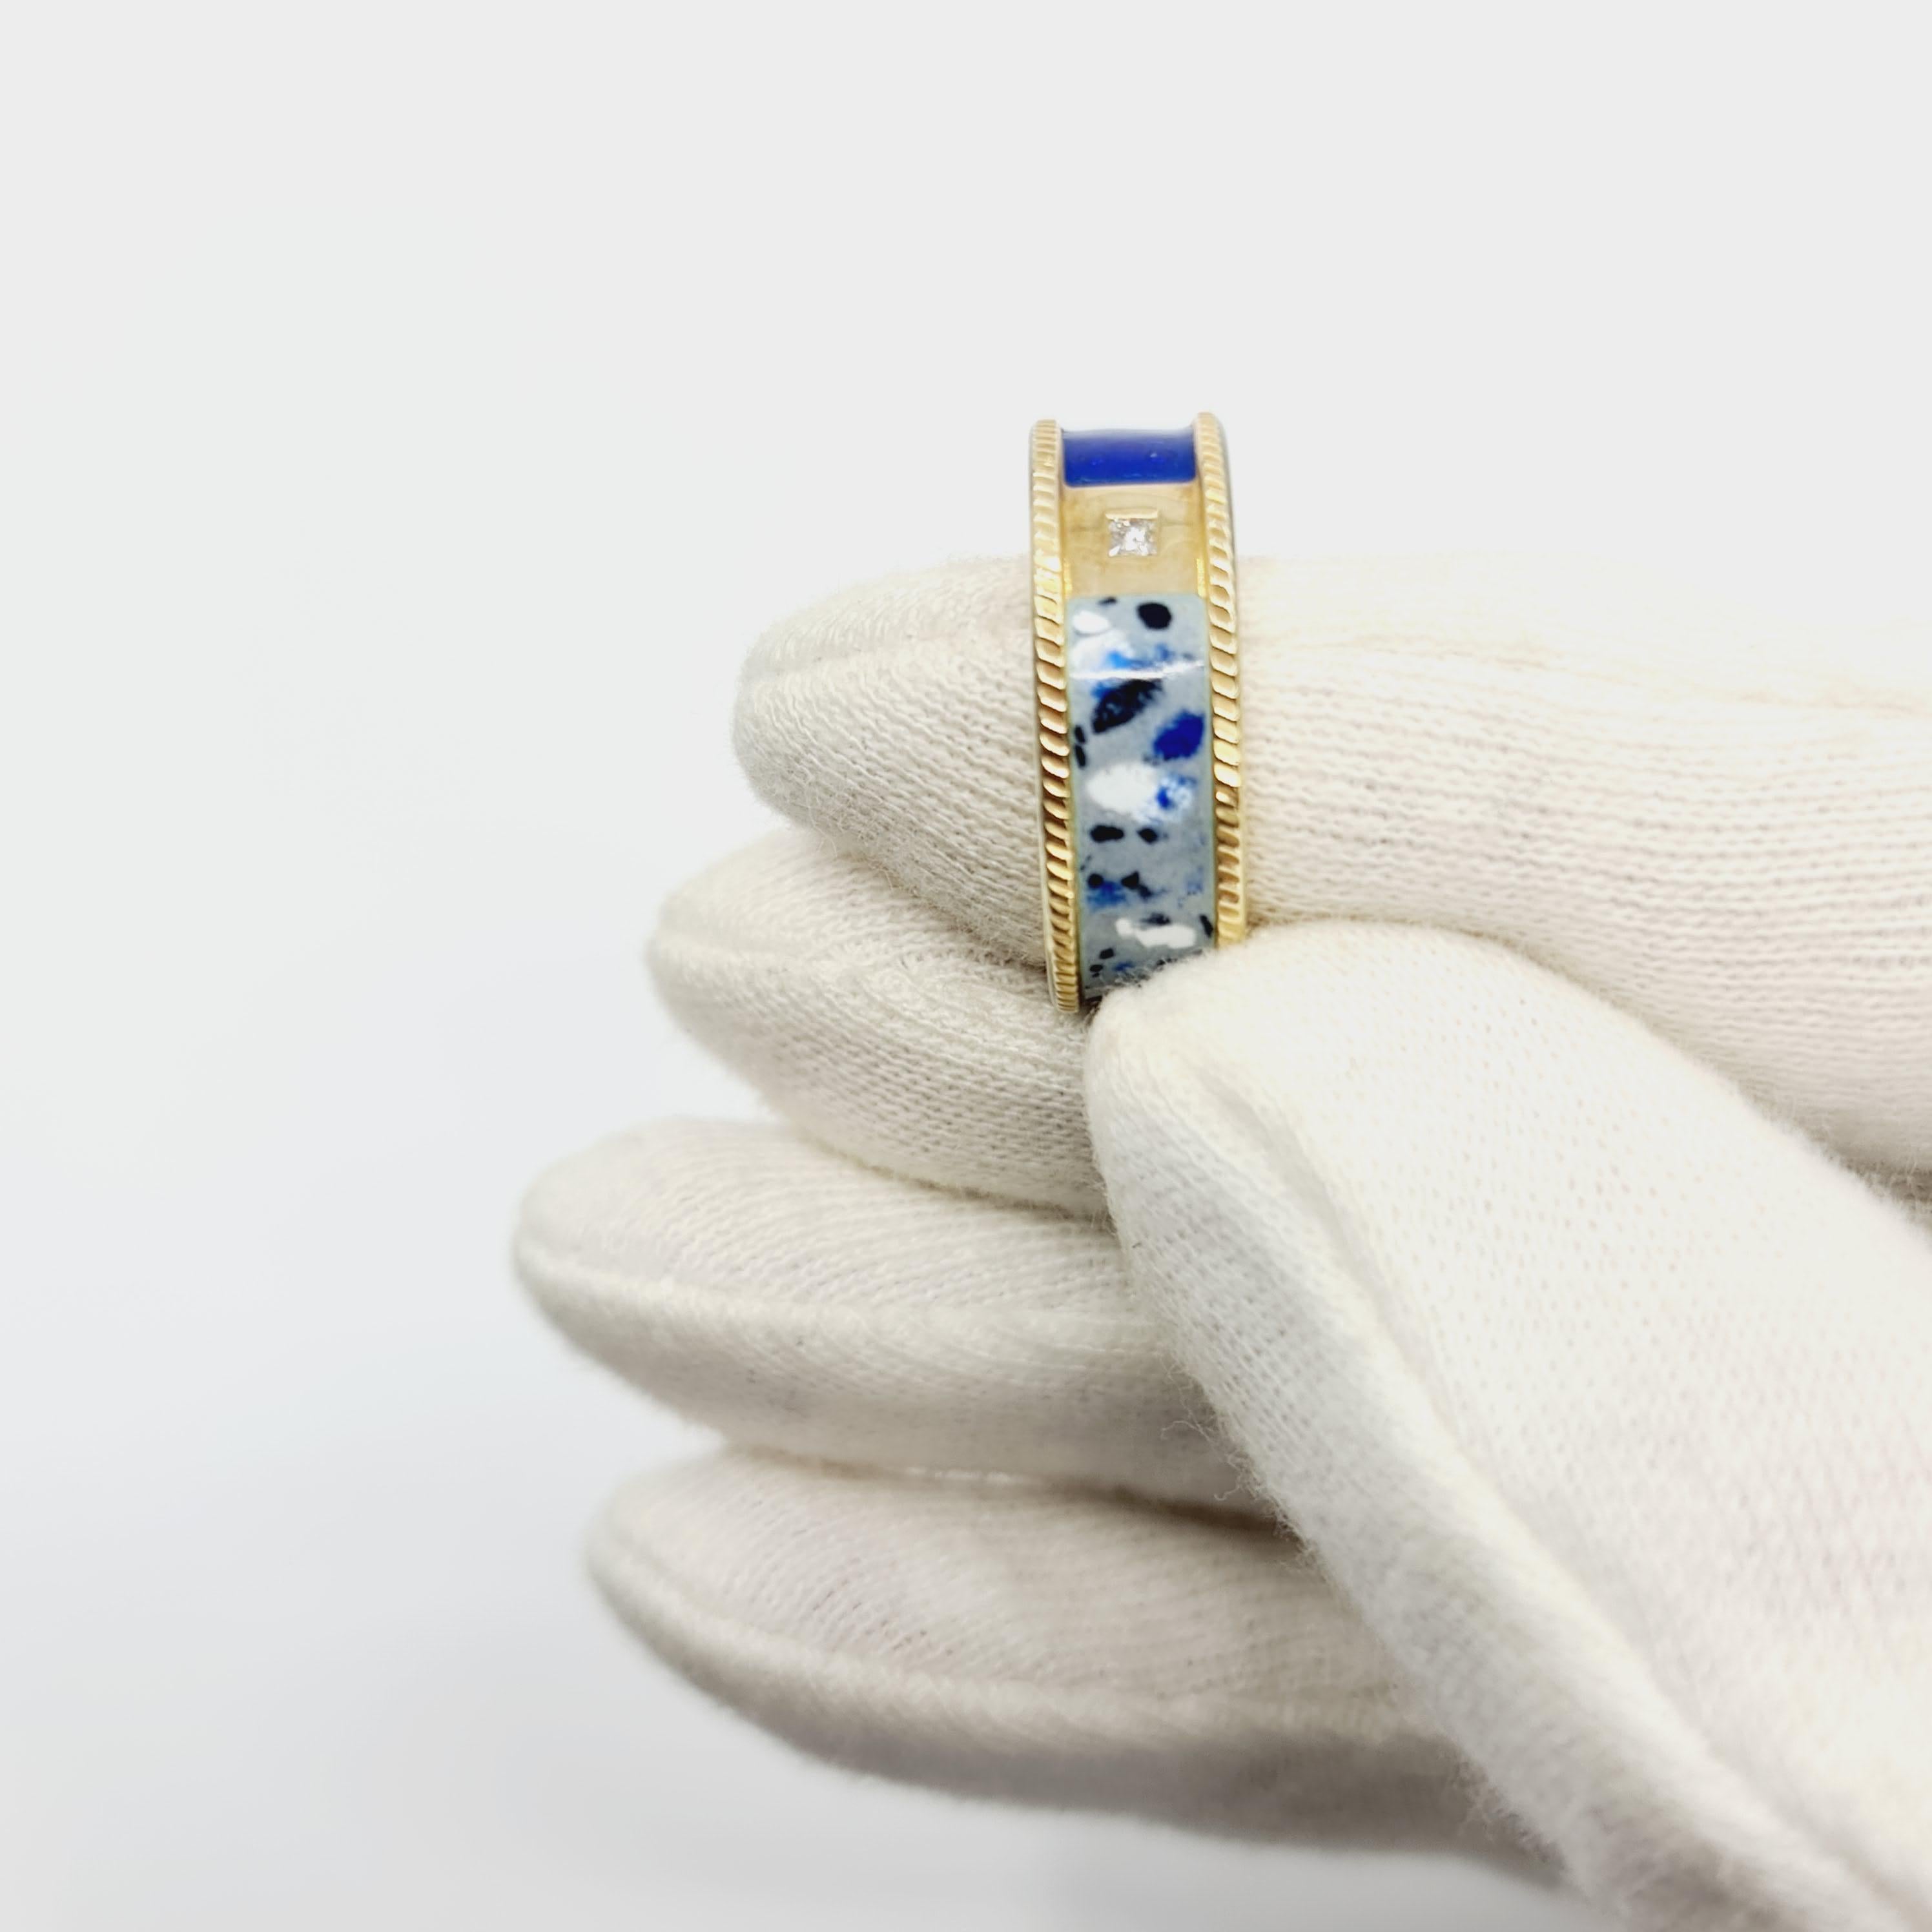 0.05 Carat Princess Cut Diamond Ring G/IF 14k Gold, Blue/Grey/White Enamel For Sale 4